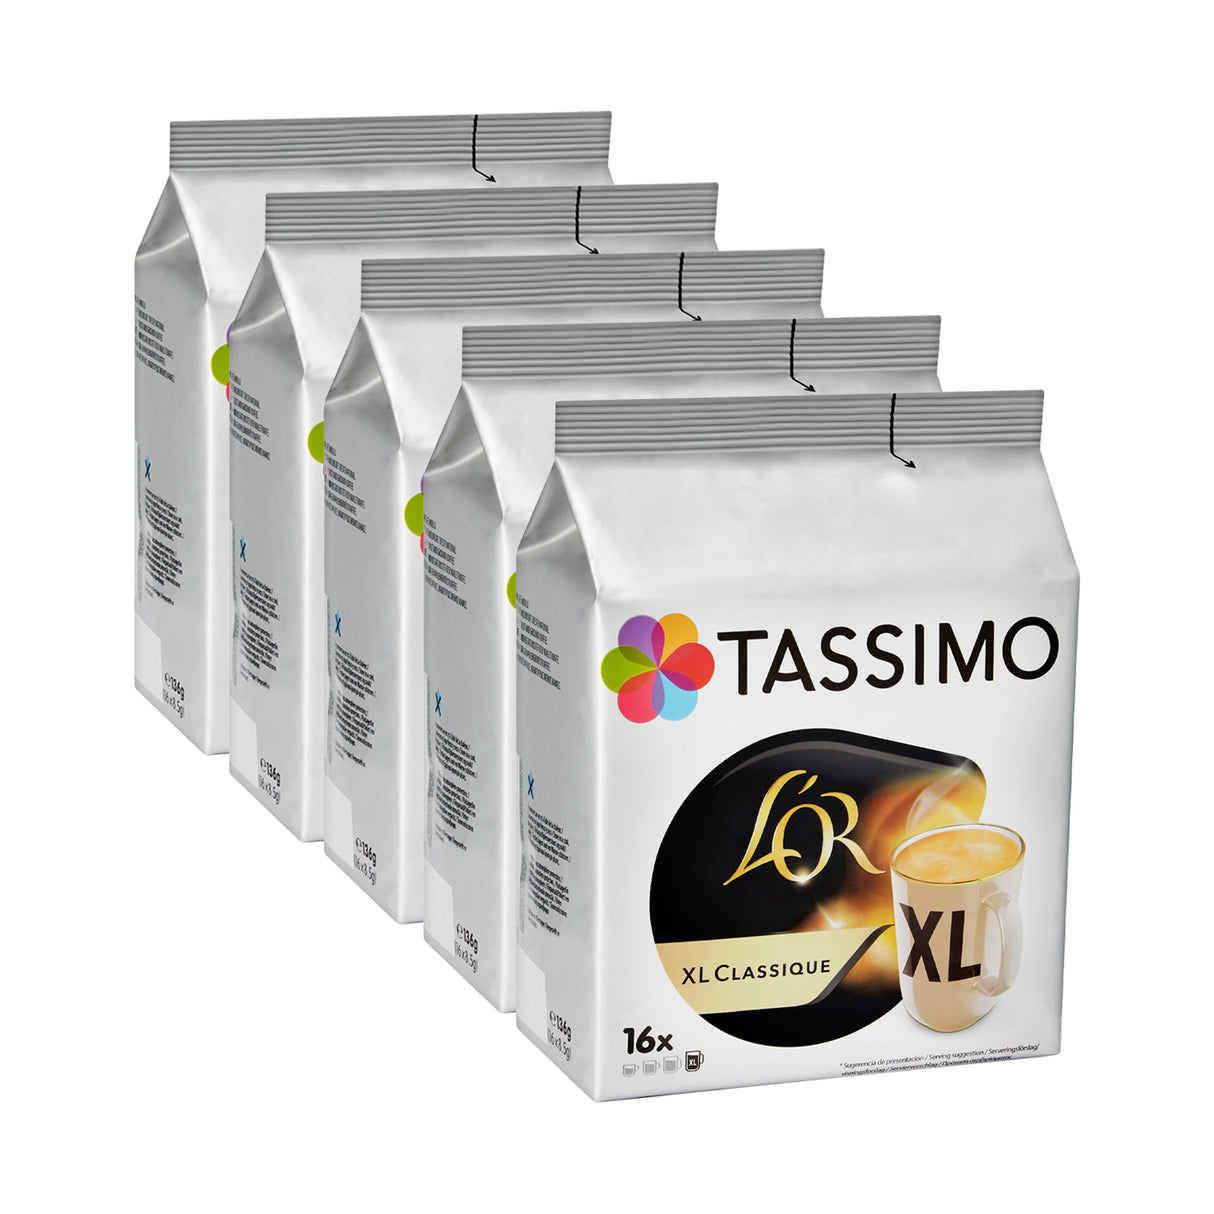 Tassimo T Discs L'OR XL Classique 5 pack